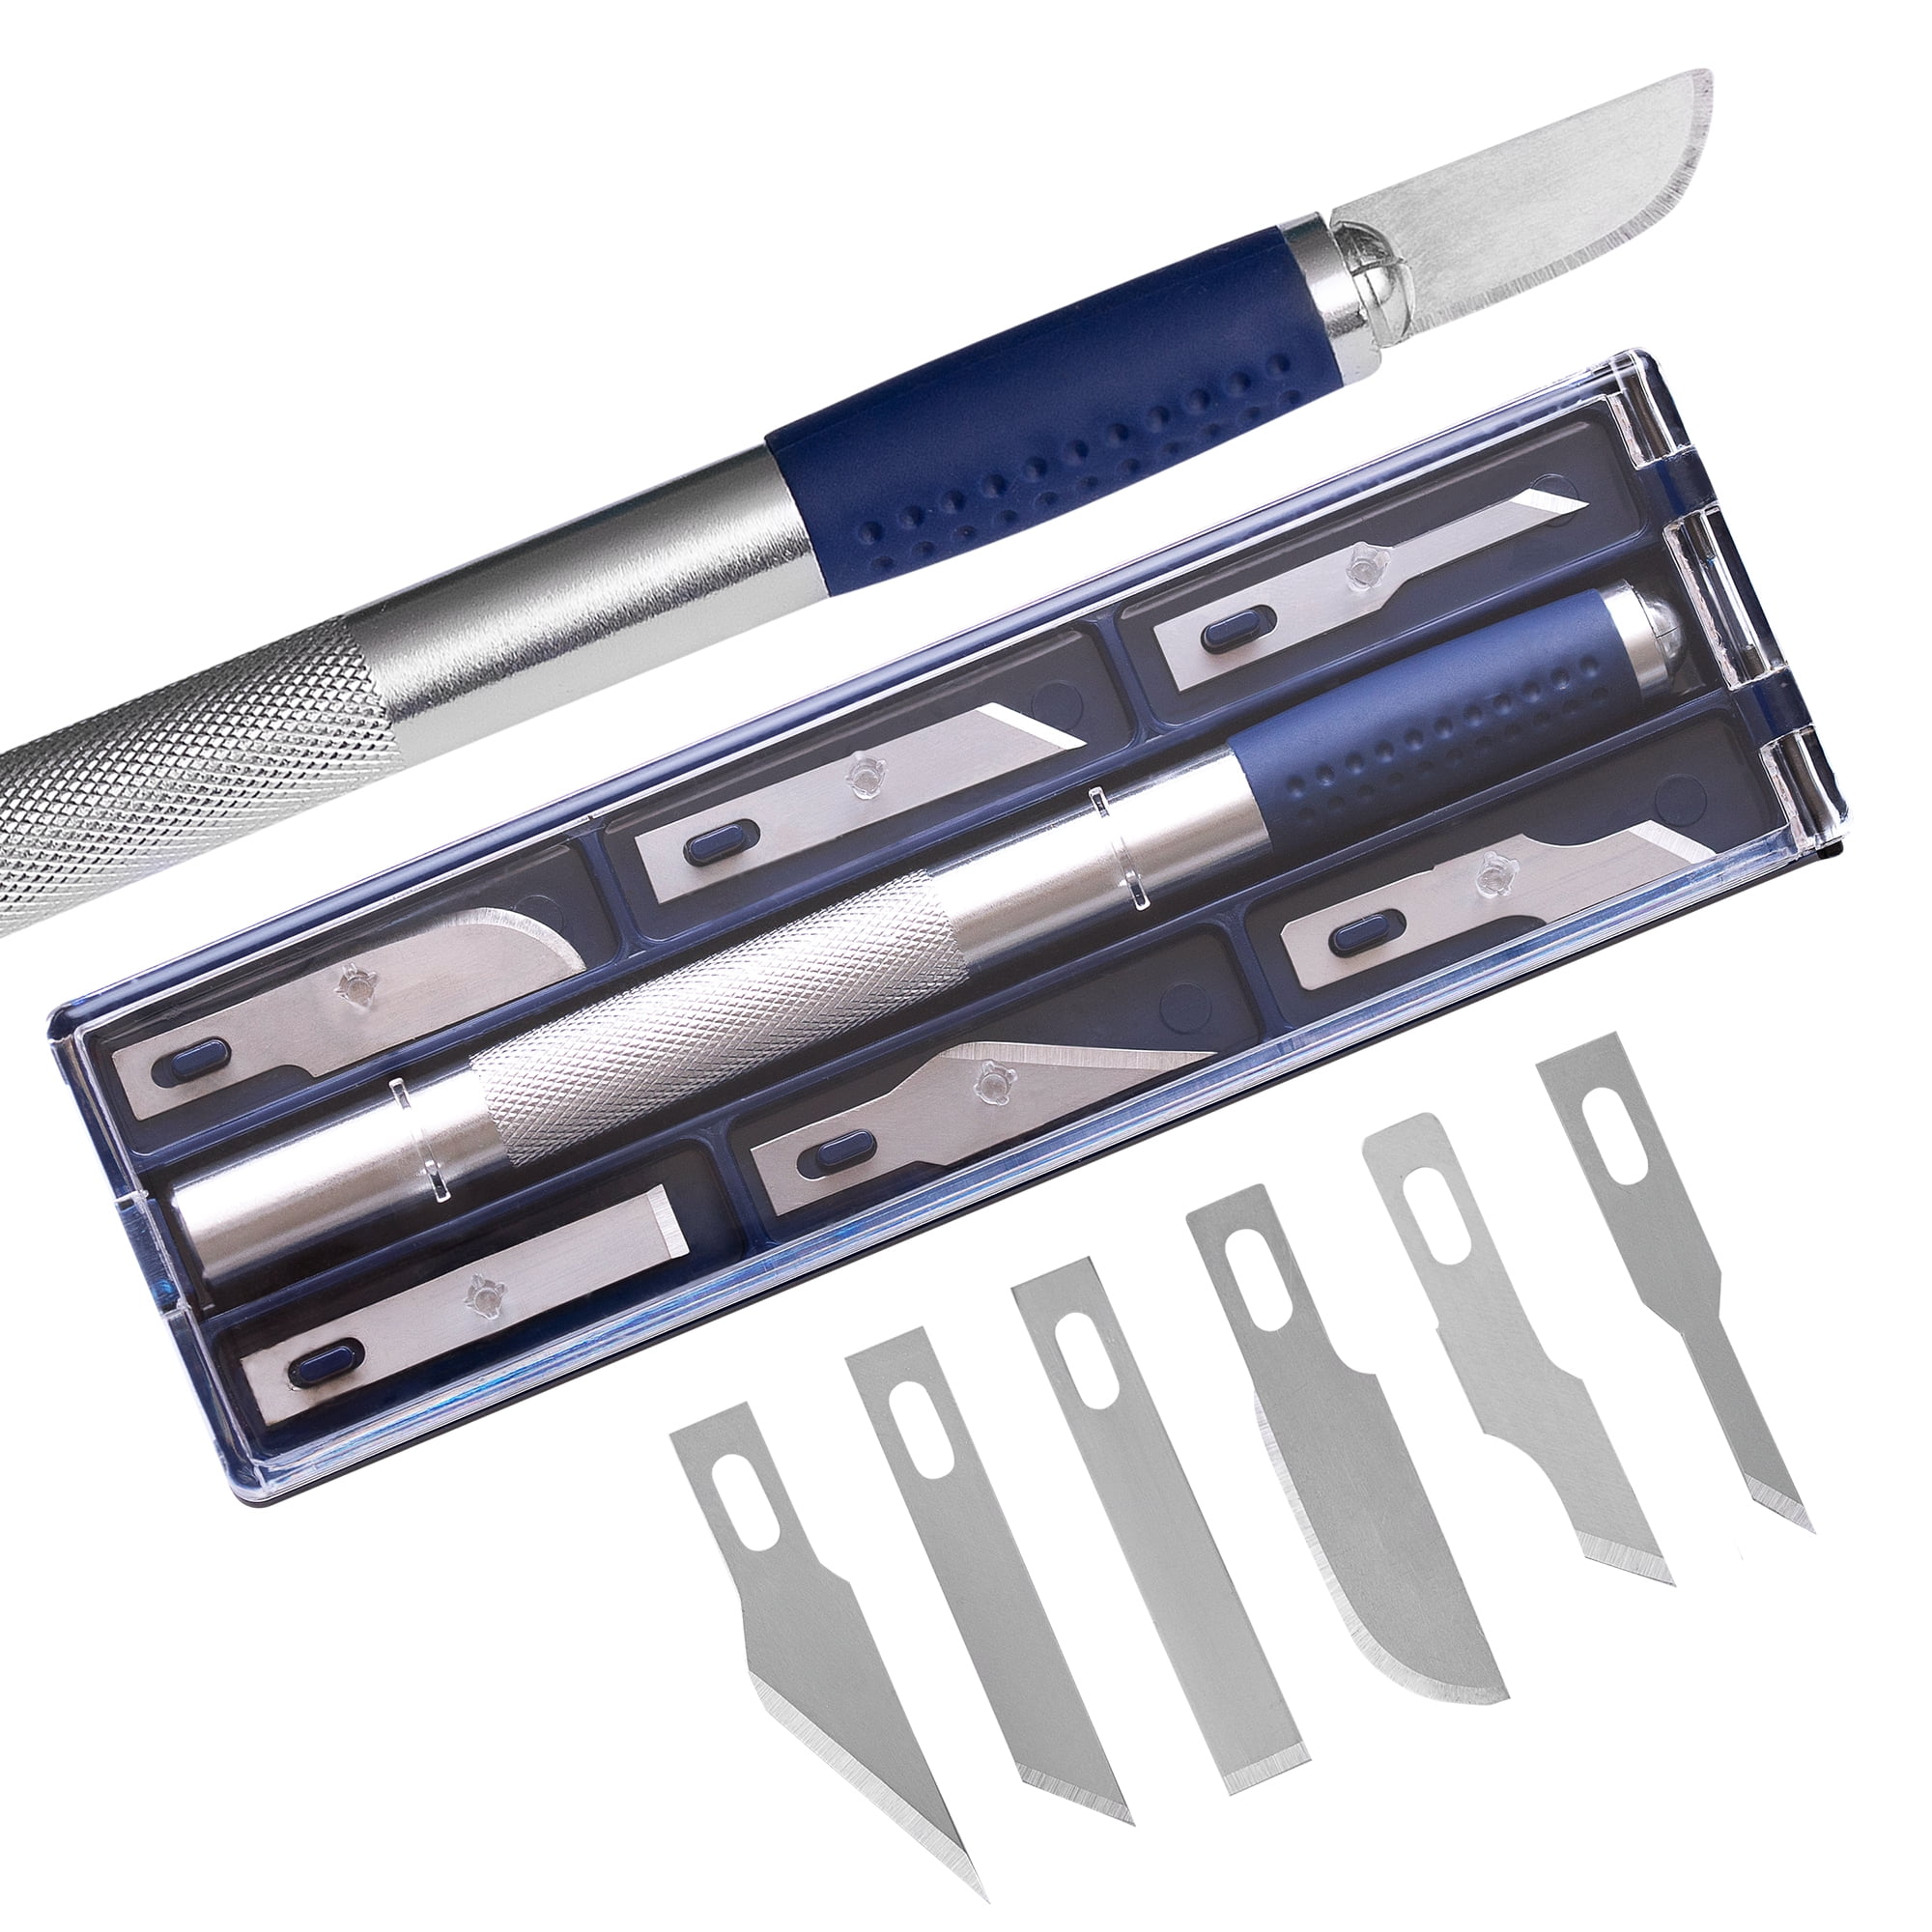 7 Pcs Knife Set Razor Blade Exacto Cutting Tool Craft Hobby Kit